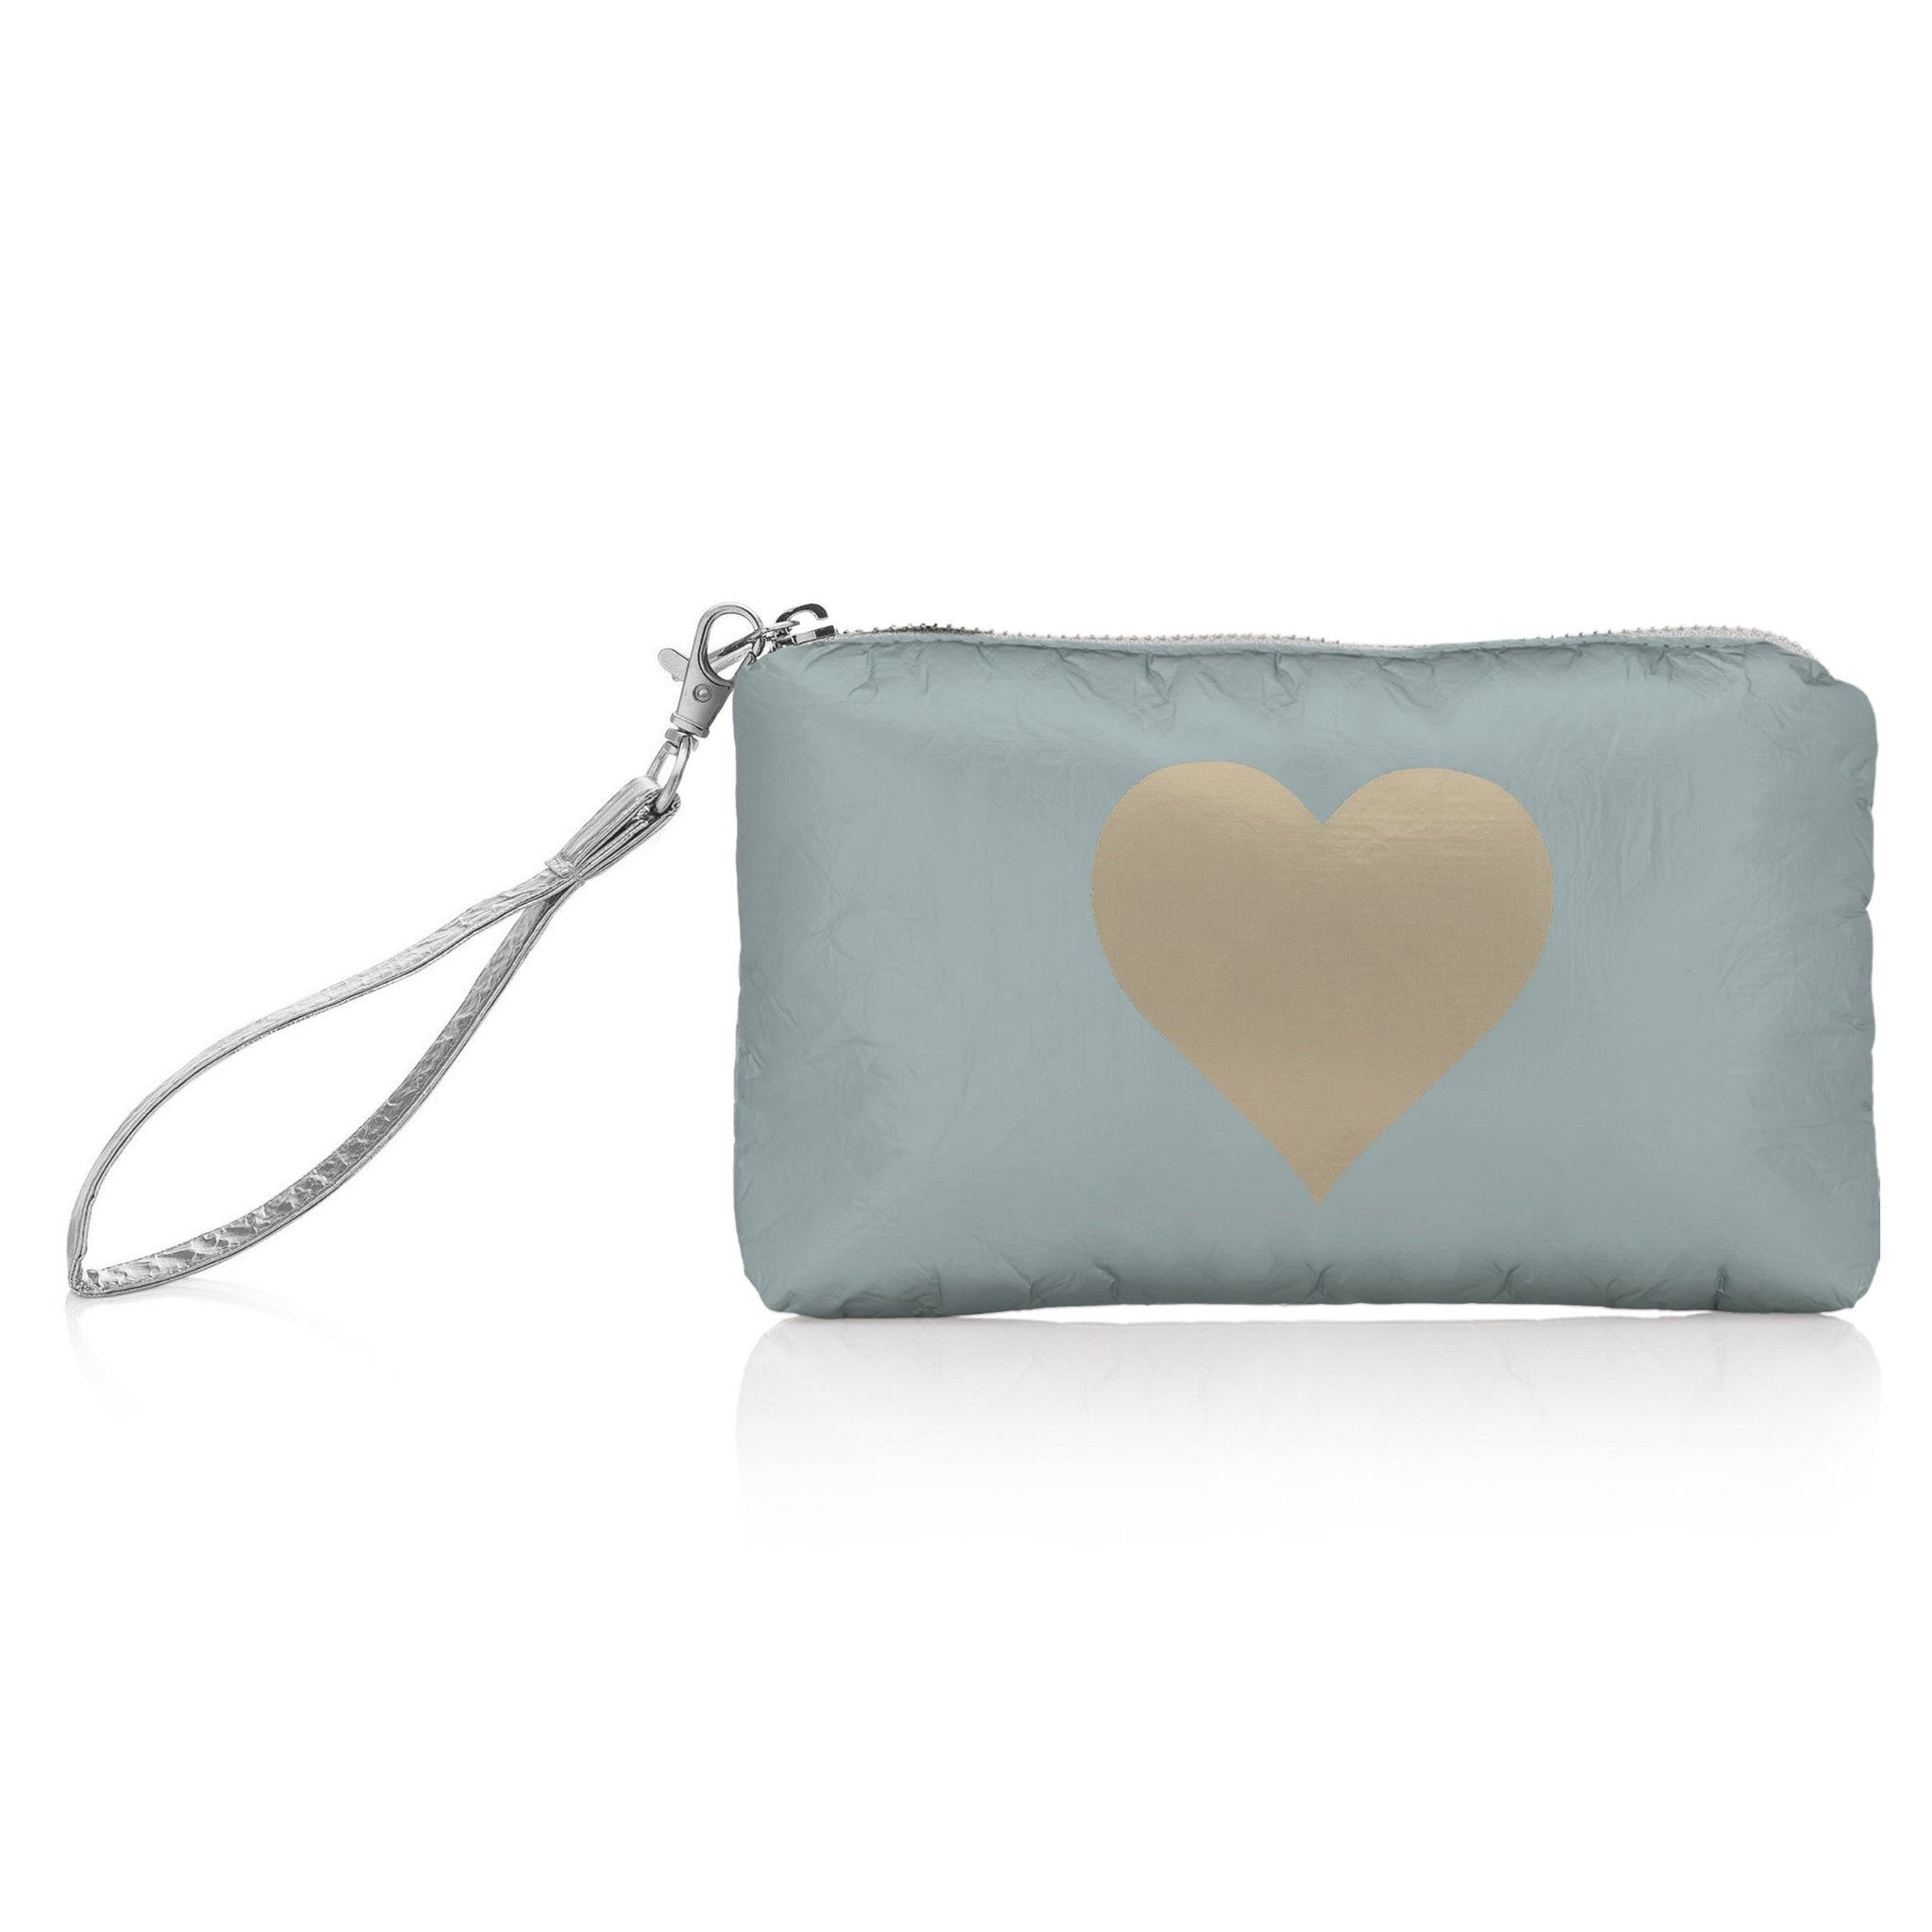 Zip Wristlet - Shimmer Gray with Golden Heart